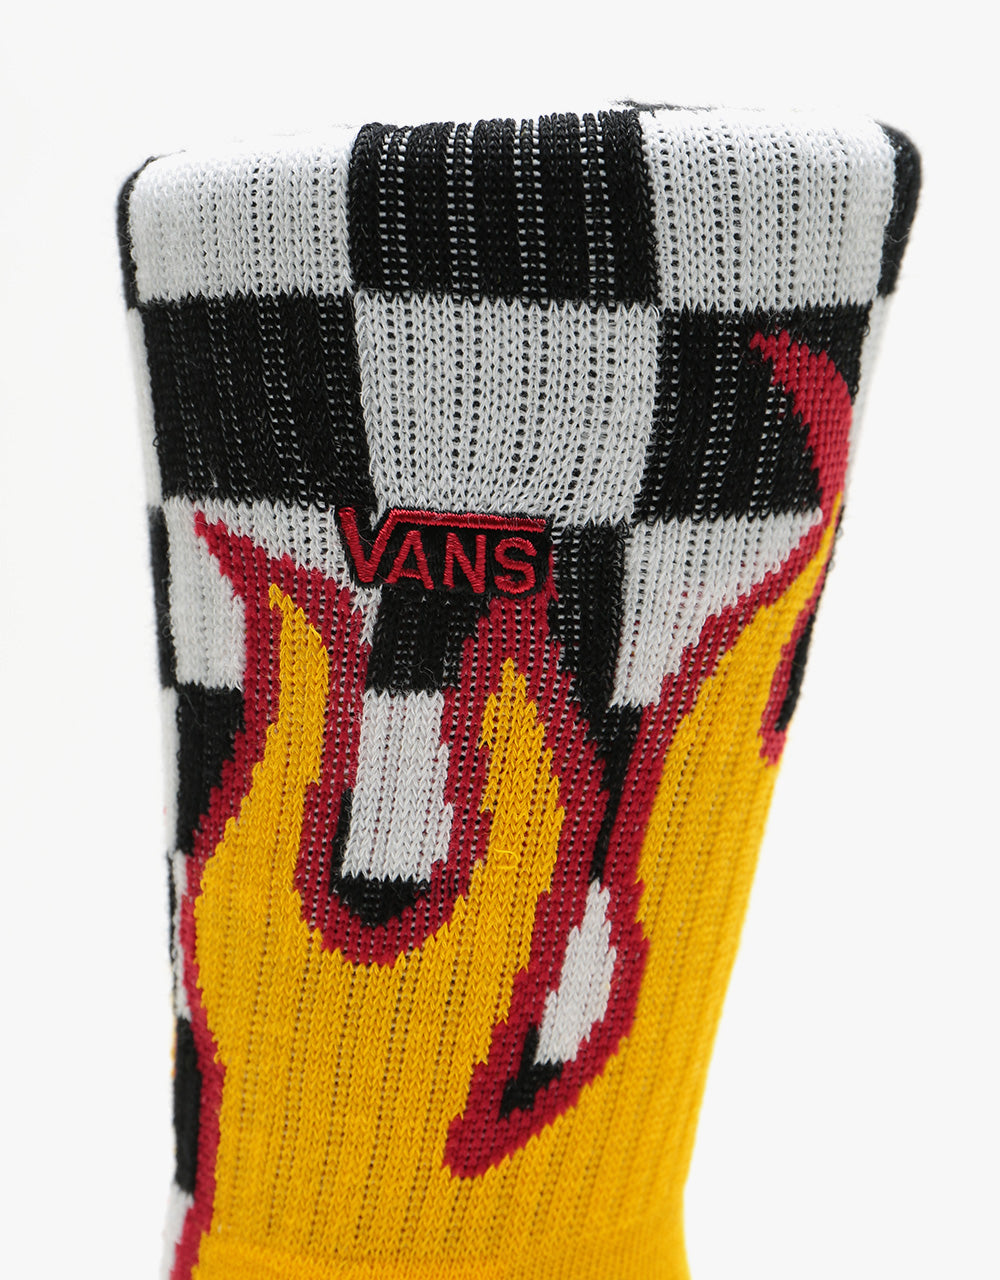 Vans Flame Check Crew Socks - Black/White Check/Flame